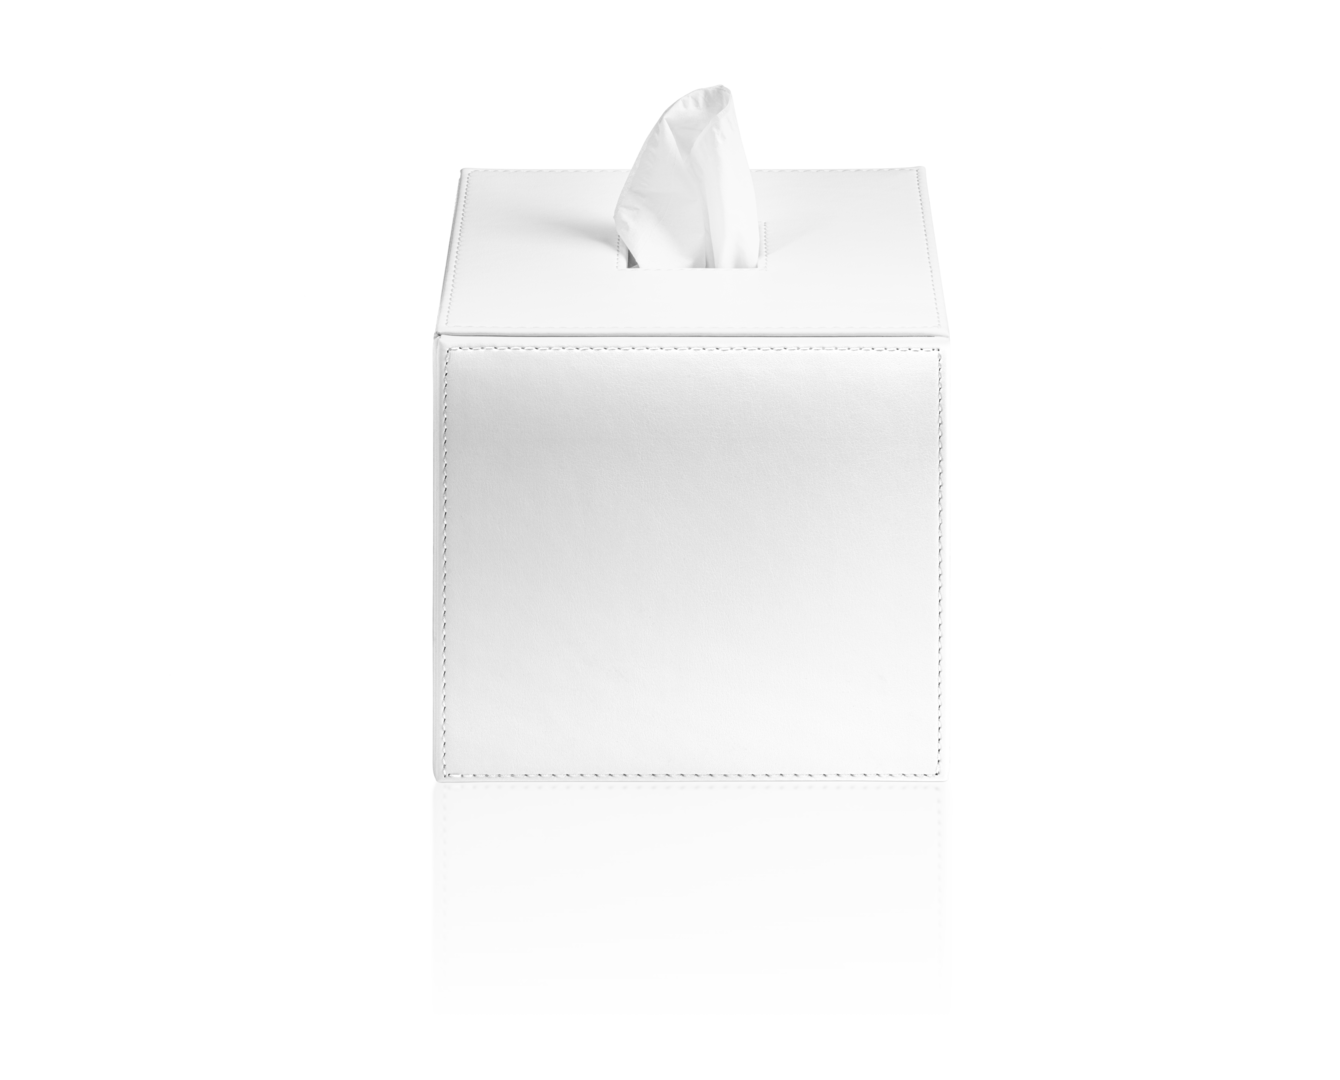 DW KB 88, Tissue Box Holder in White